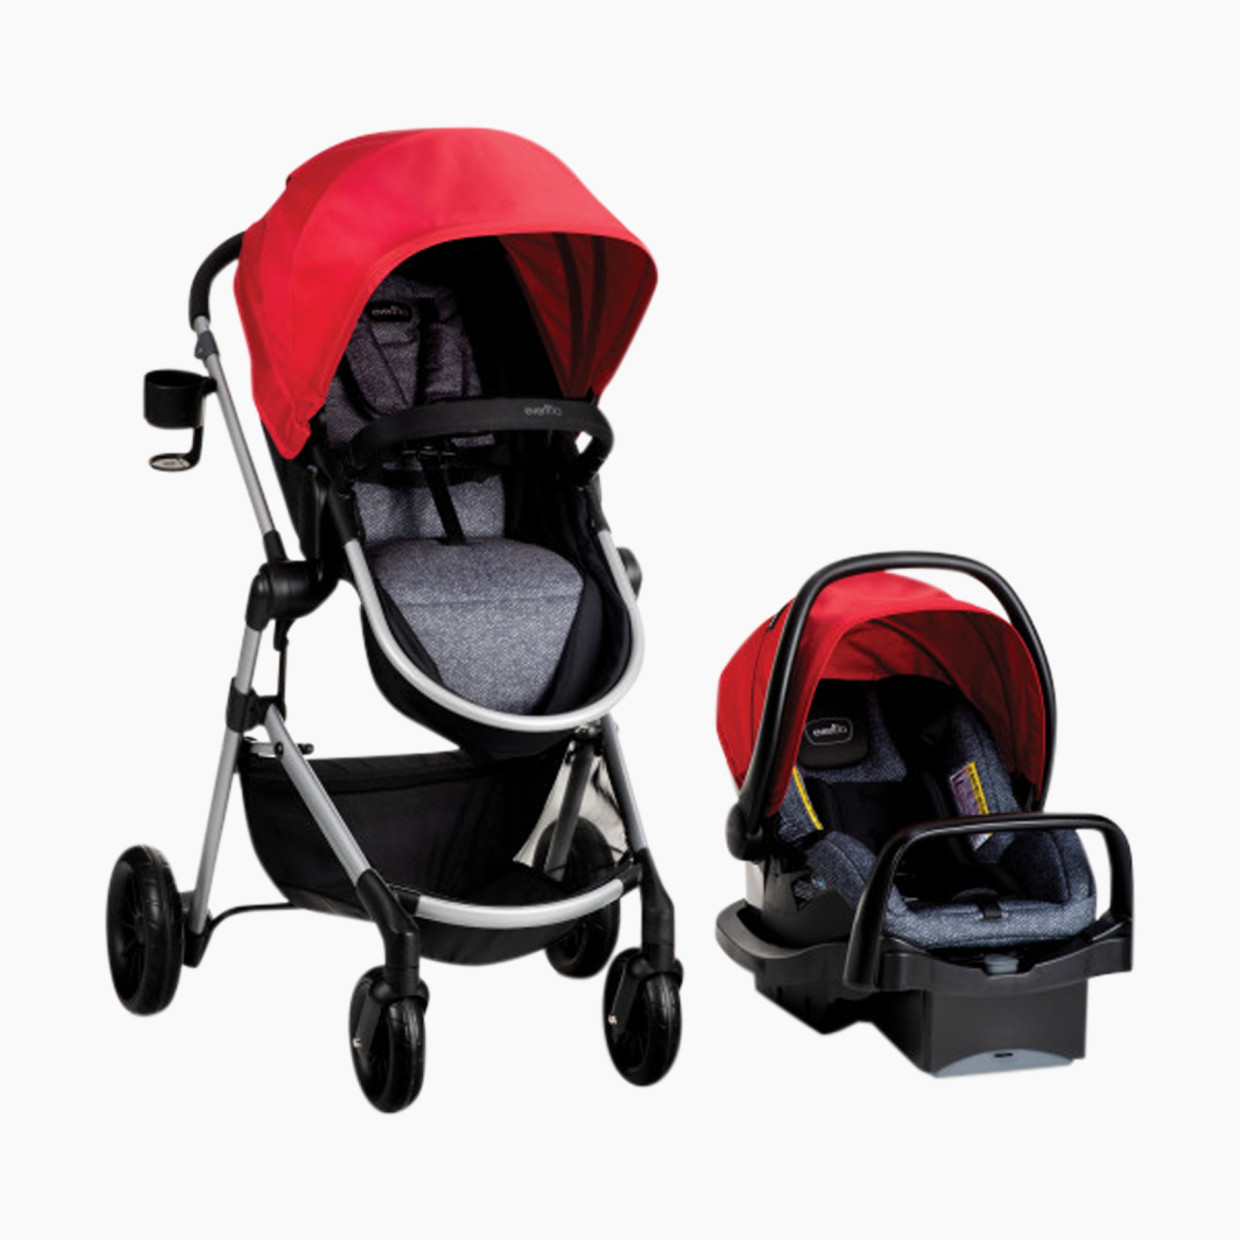 Evenflo Pivot Travel System with Safemax Infant Car Seat - Salsa.